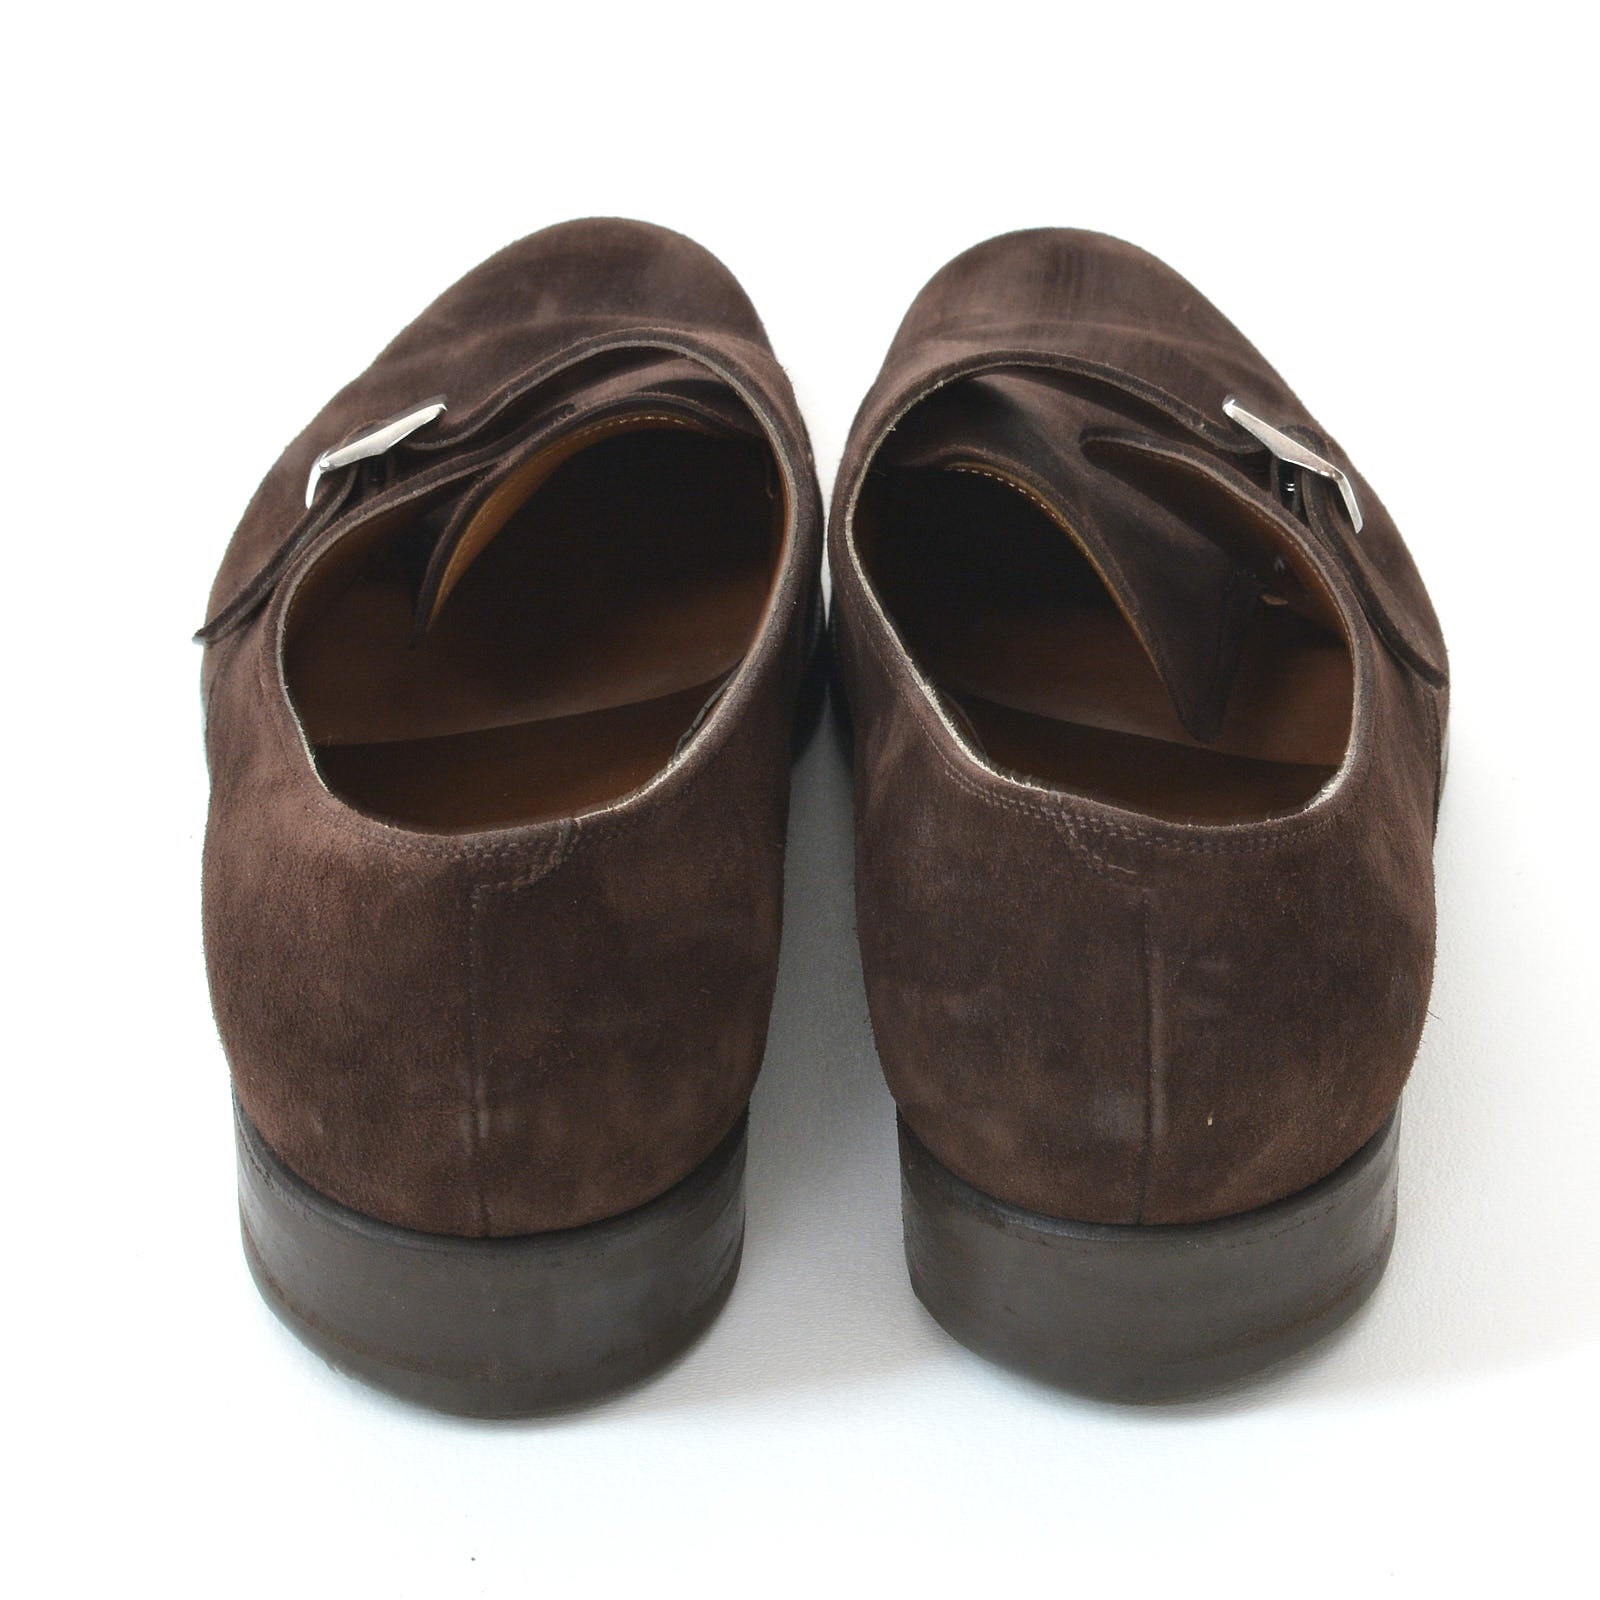 EDWARD GREEN Mercer Last 82 Mink Suede Leather Single Monk Dress Shoes UK 8.5 US 9 EDWARD GREEN